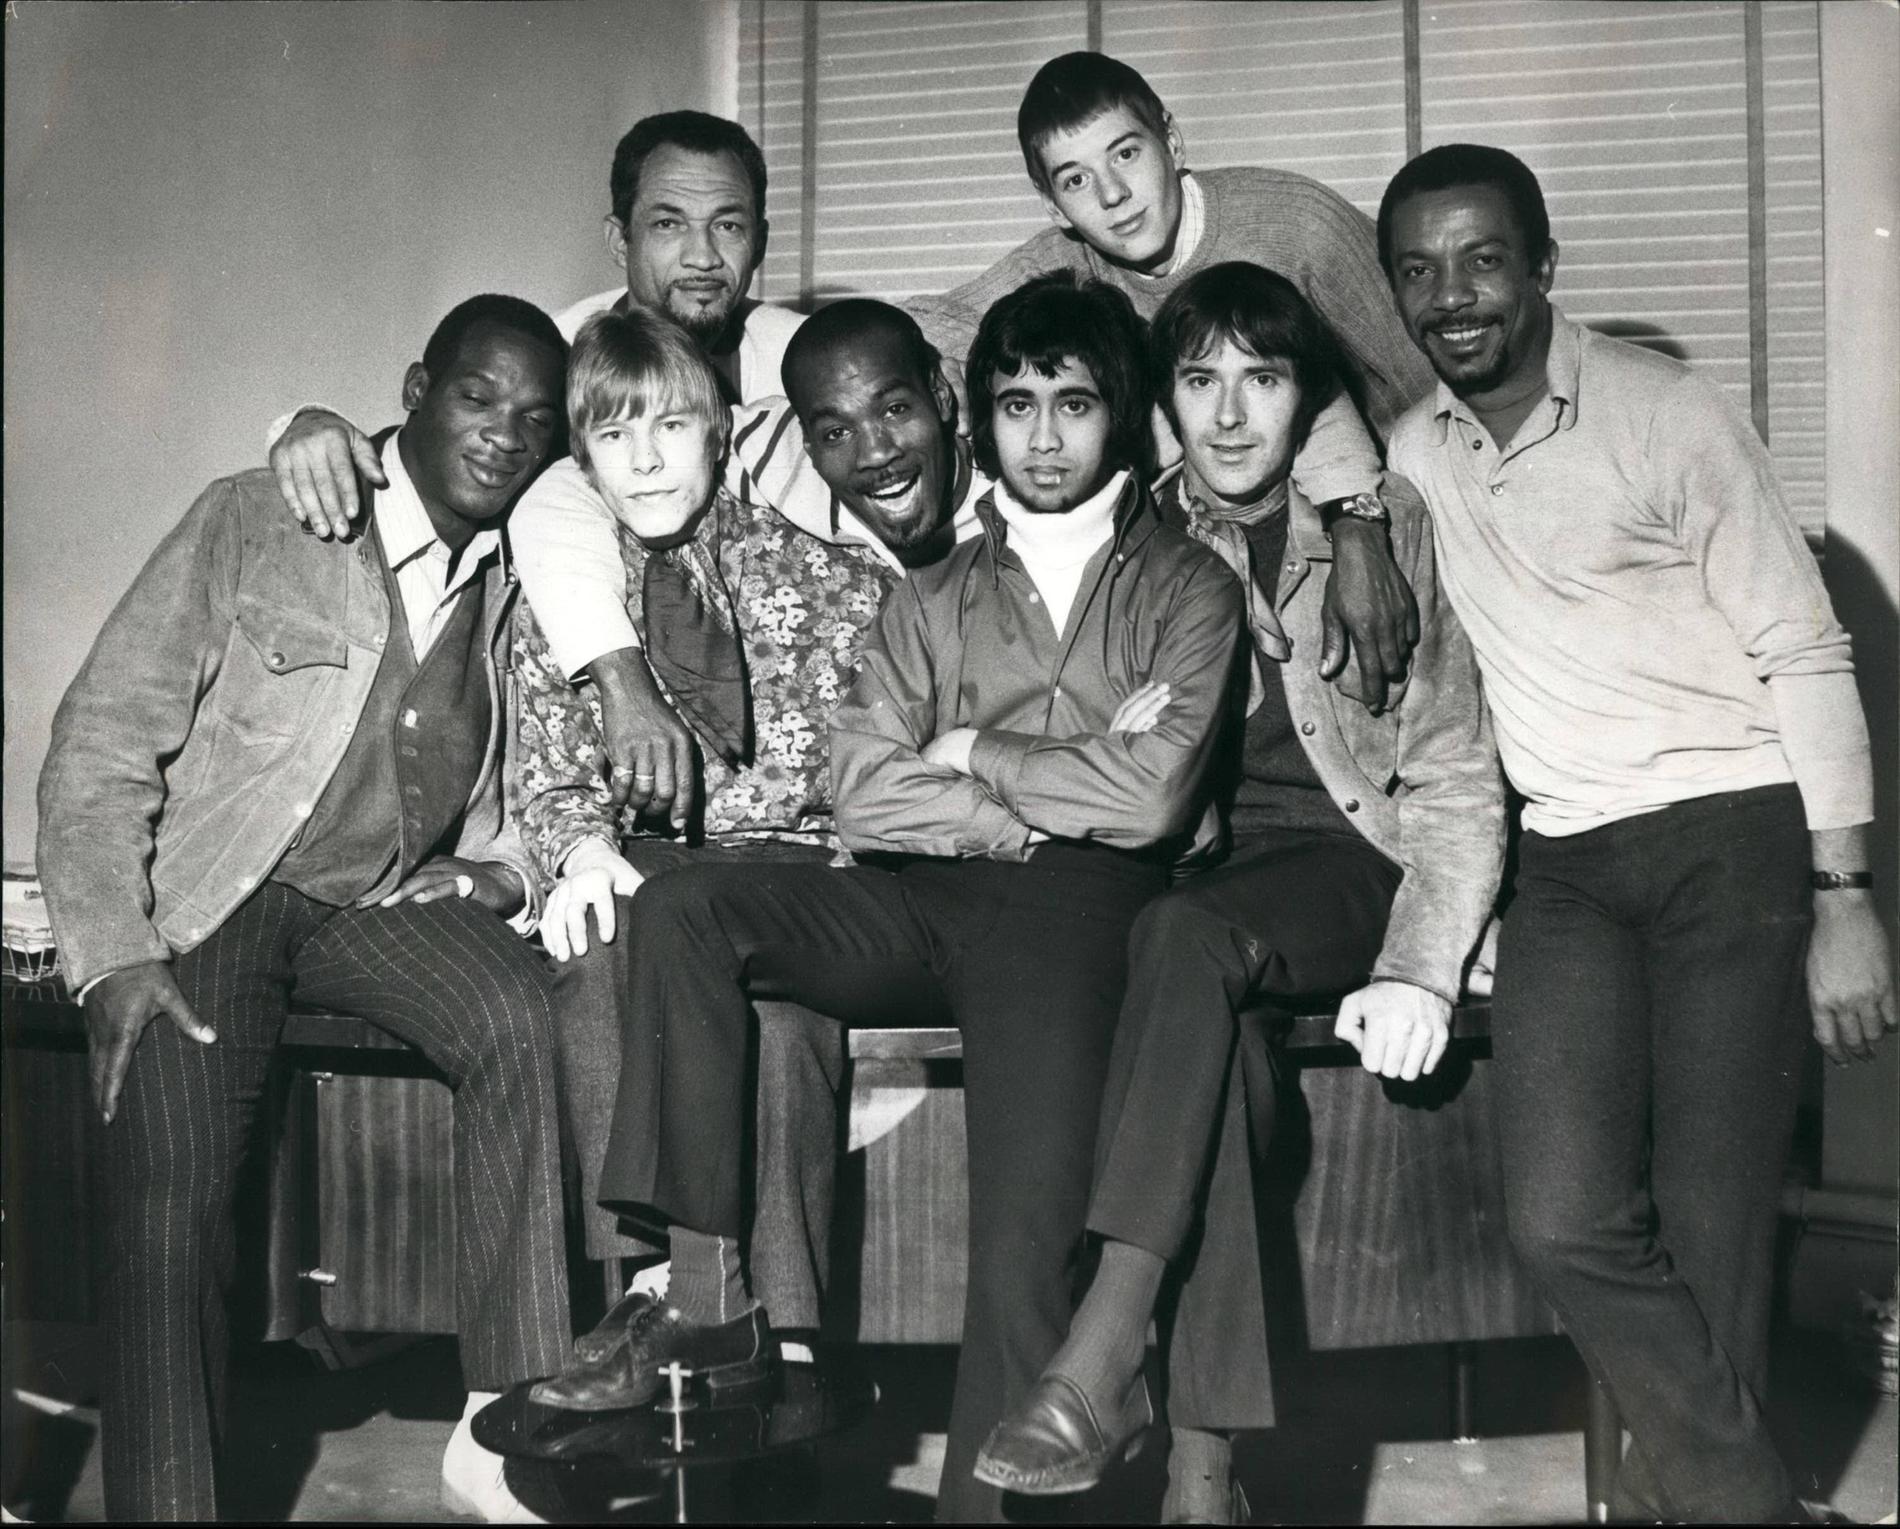 År 1967 bestod bandet The Foundations av Clem Curtis, Allan Warner, Eric Allan Dale, Tony Gomesz, Peter Macbeth, Pat Burke, Mike Elliot och Tim Harris.